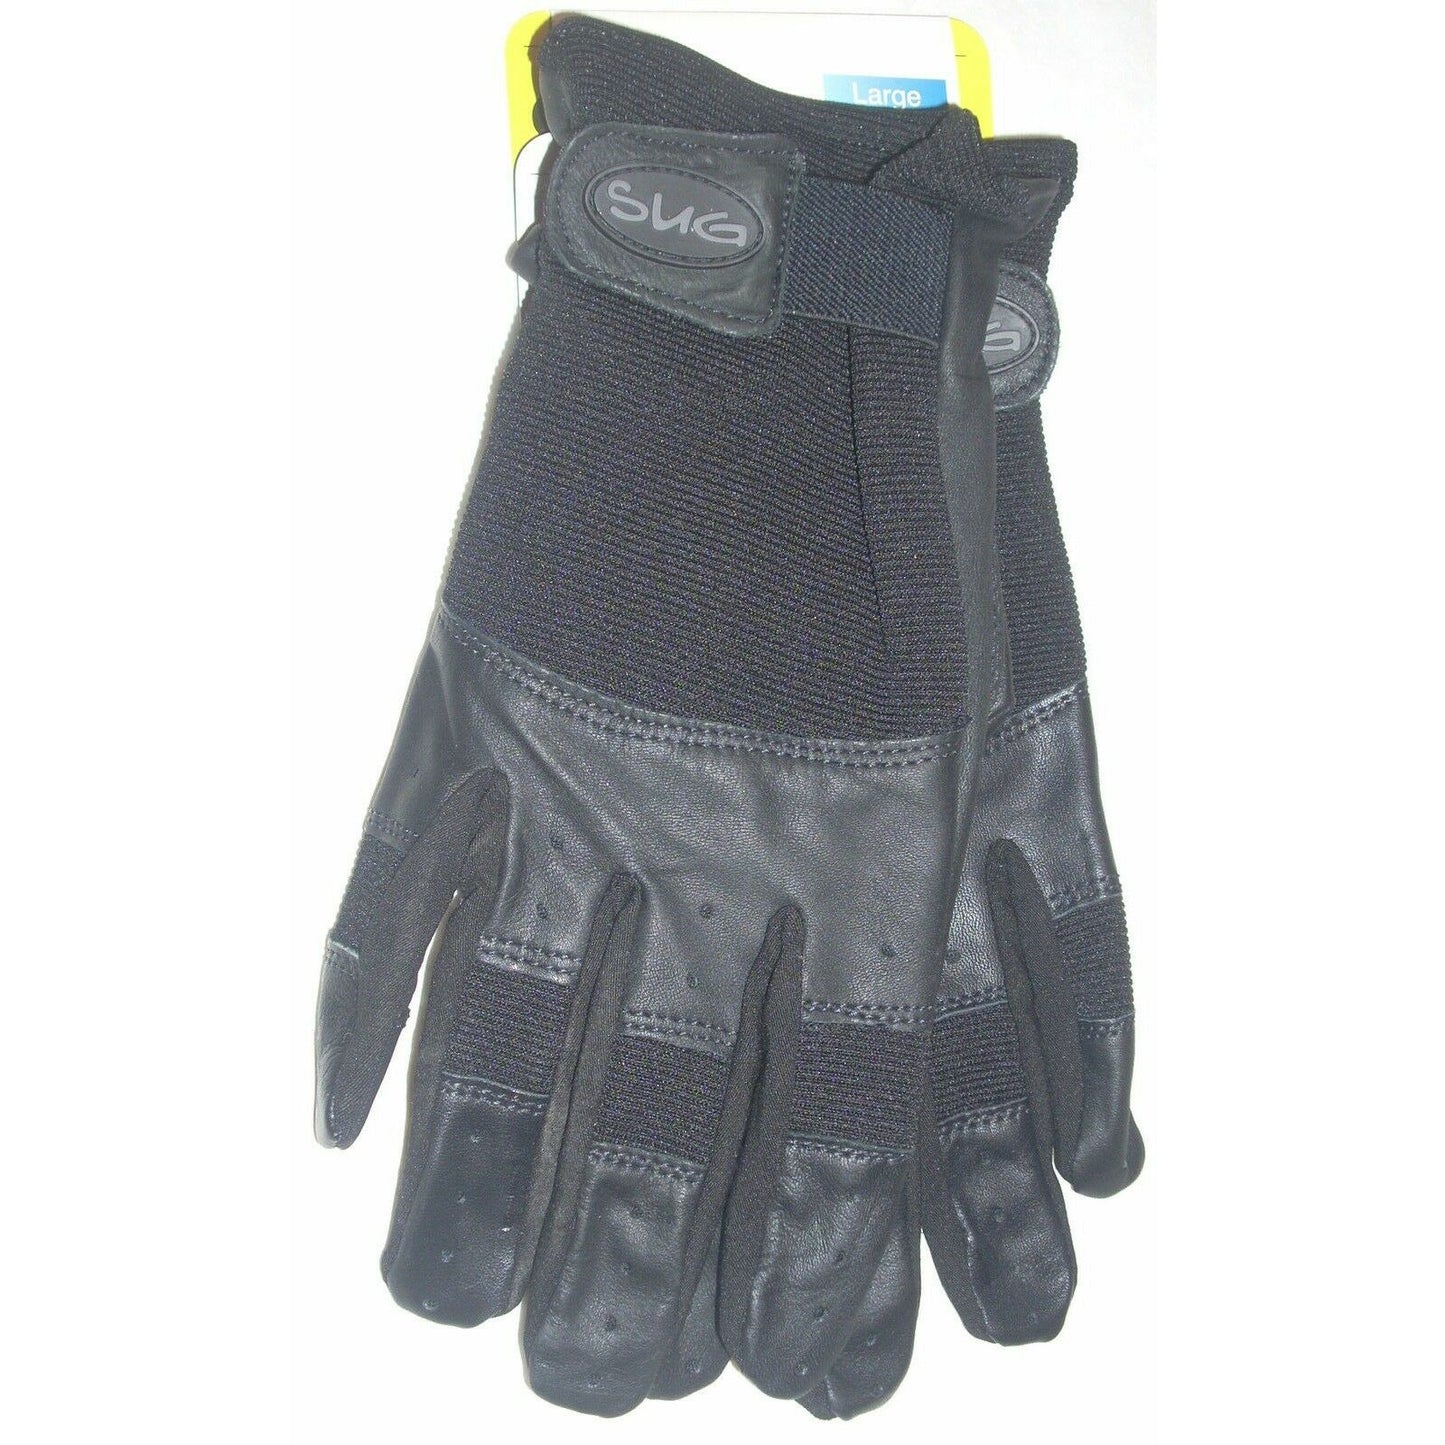 Wells Lamont 848L Sport Utility Mechanic's Gloves Leather & Spandex Large